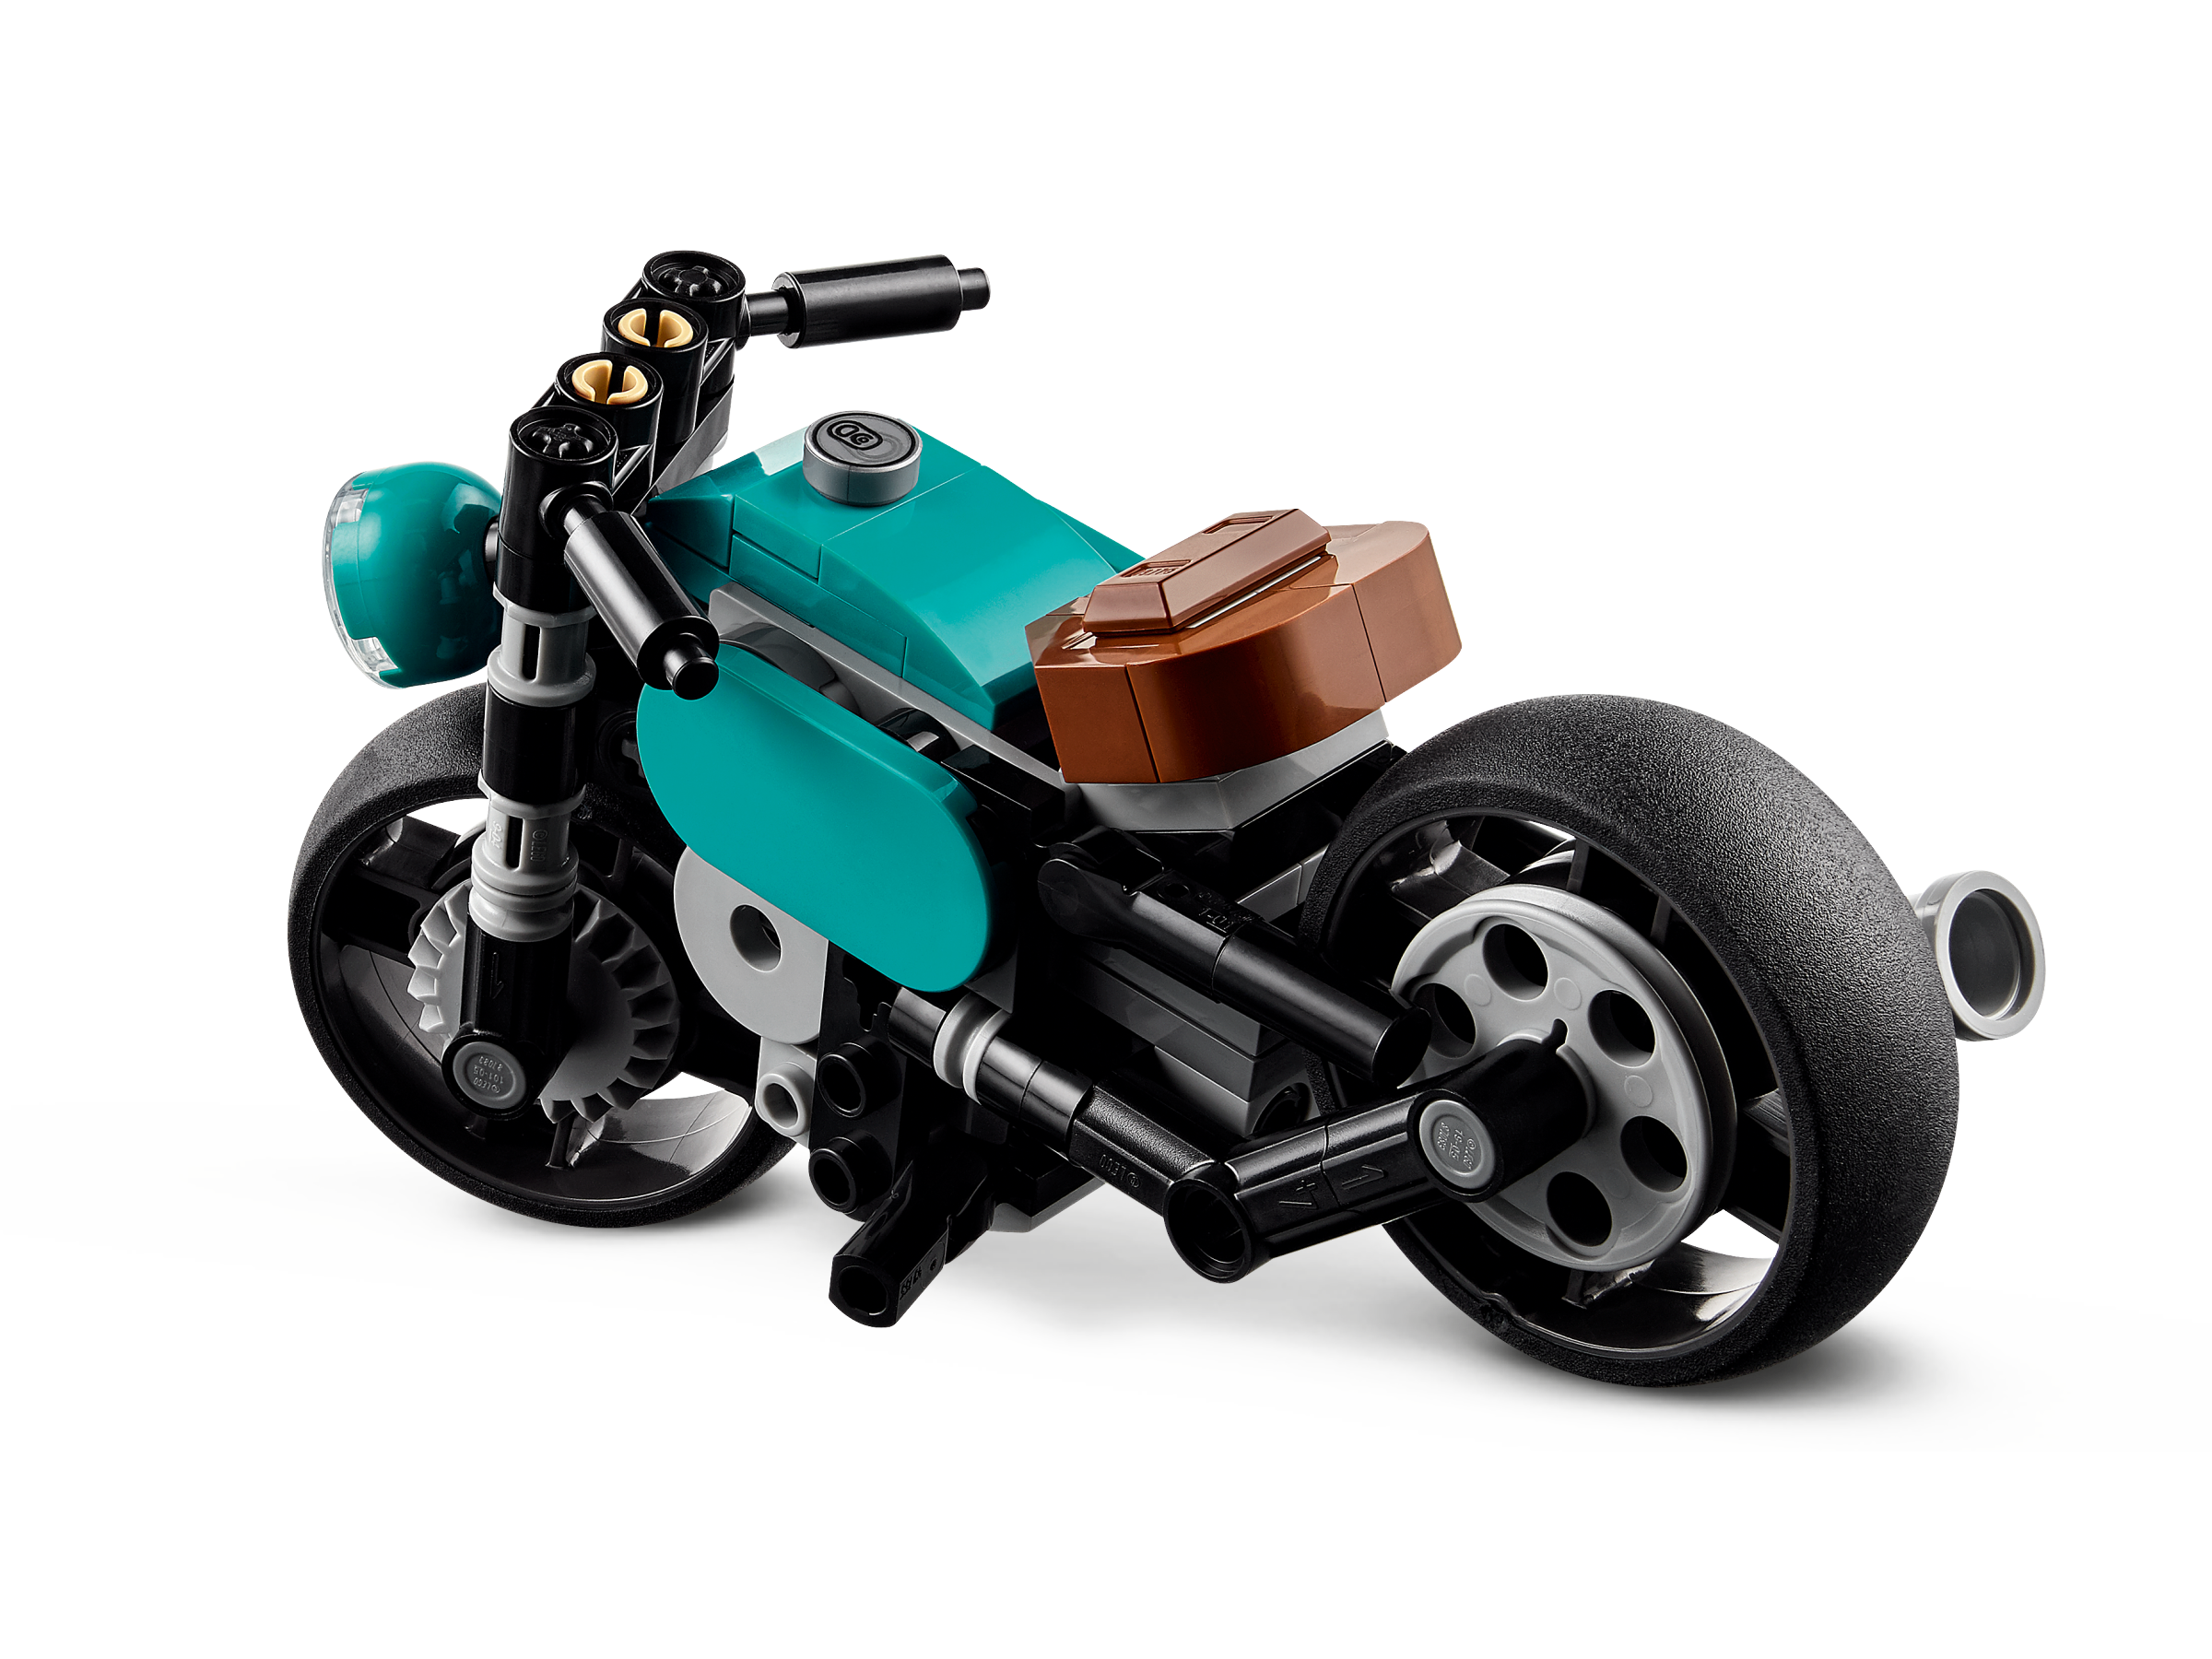 Eurotoys  5702017415888 - LEGO 31135 CREATOR MOTOCICLETTA VINTAGE